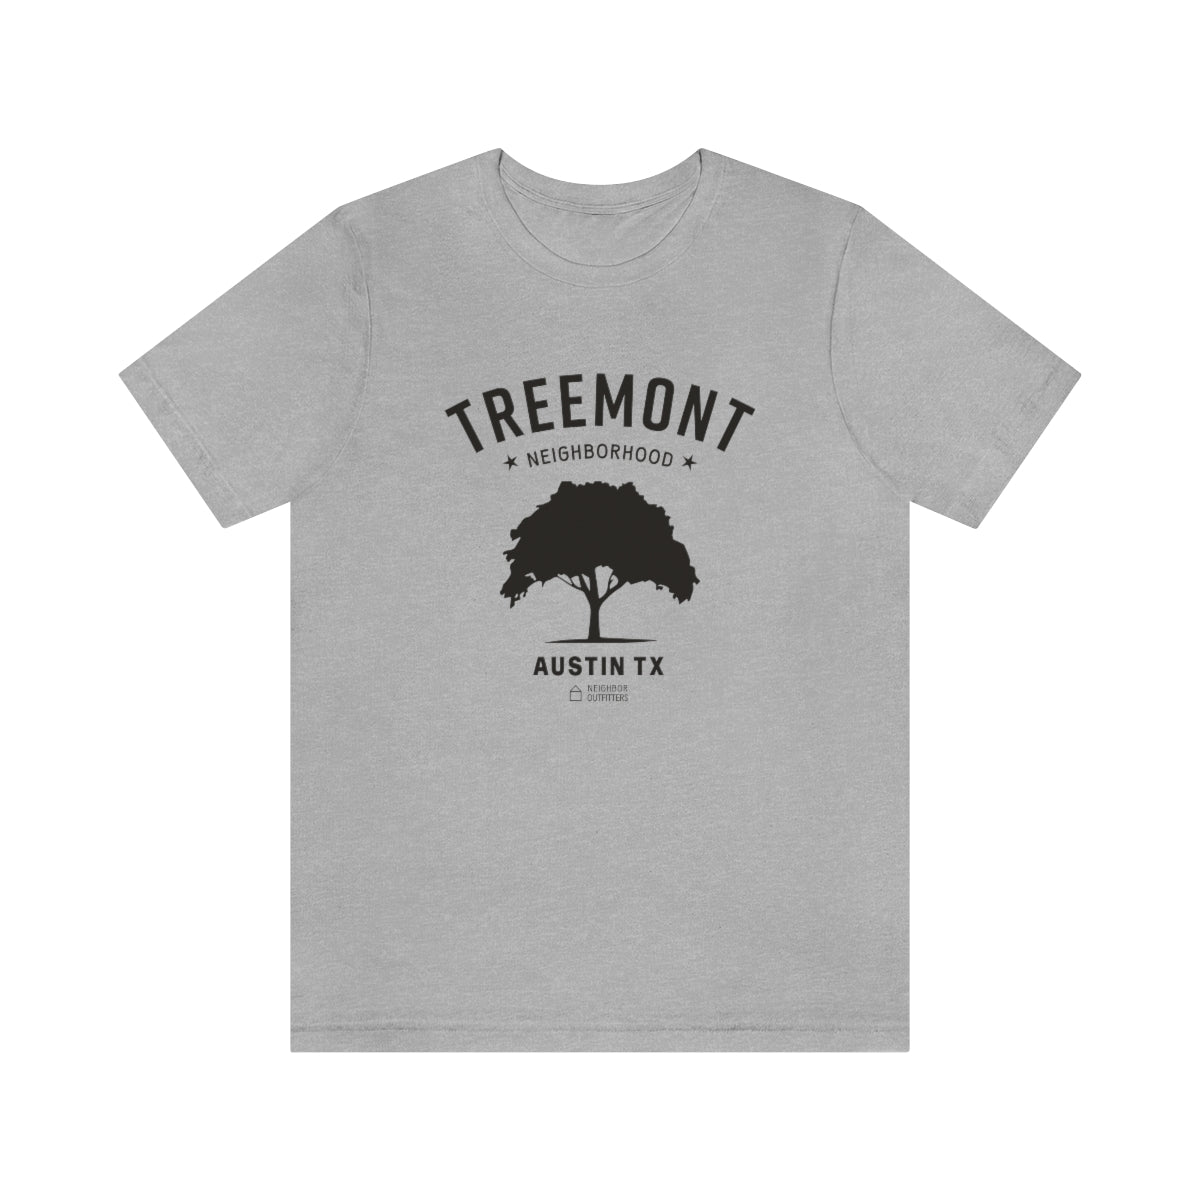 Treemont T-Shirt: "Live Oak"